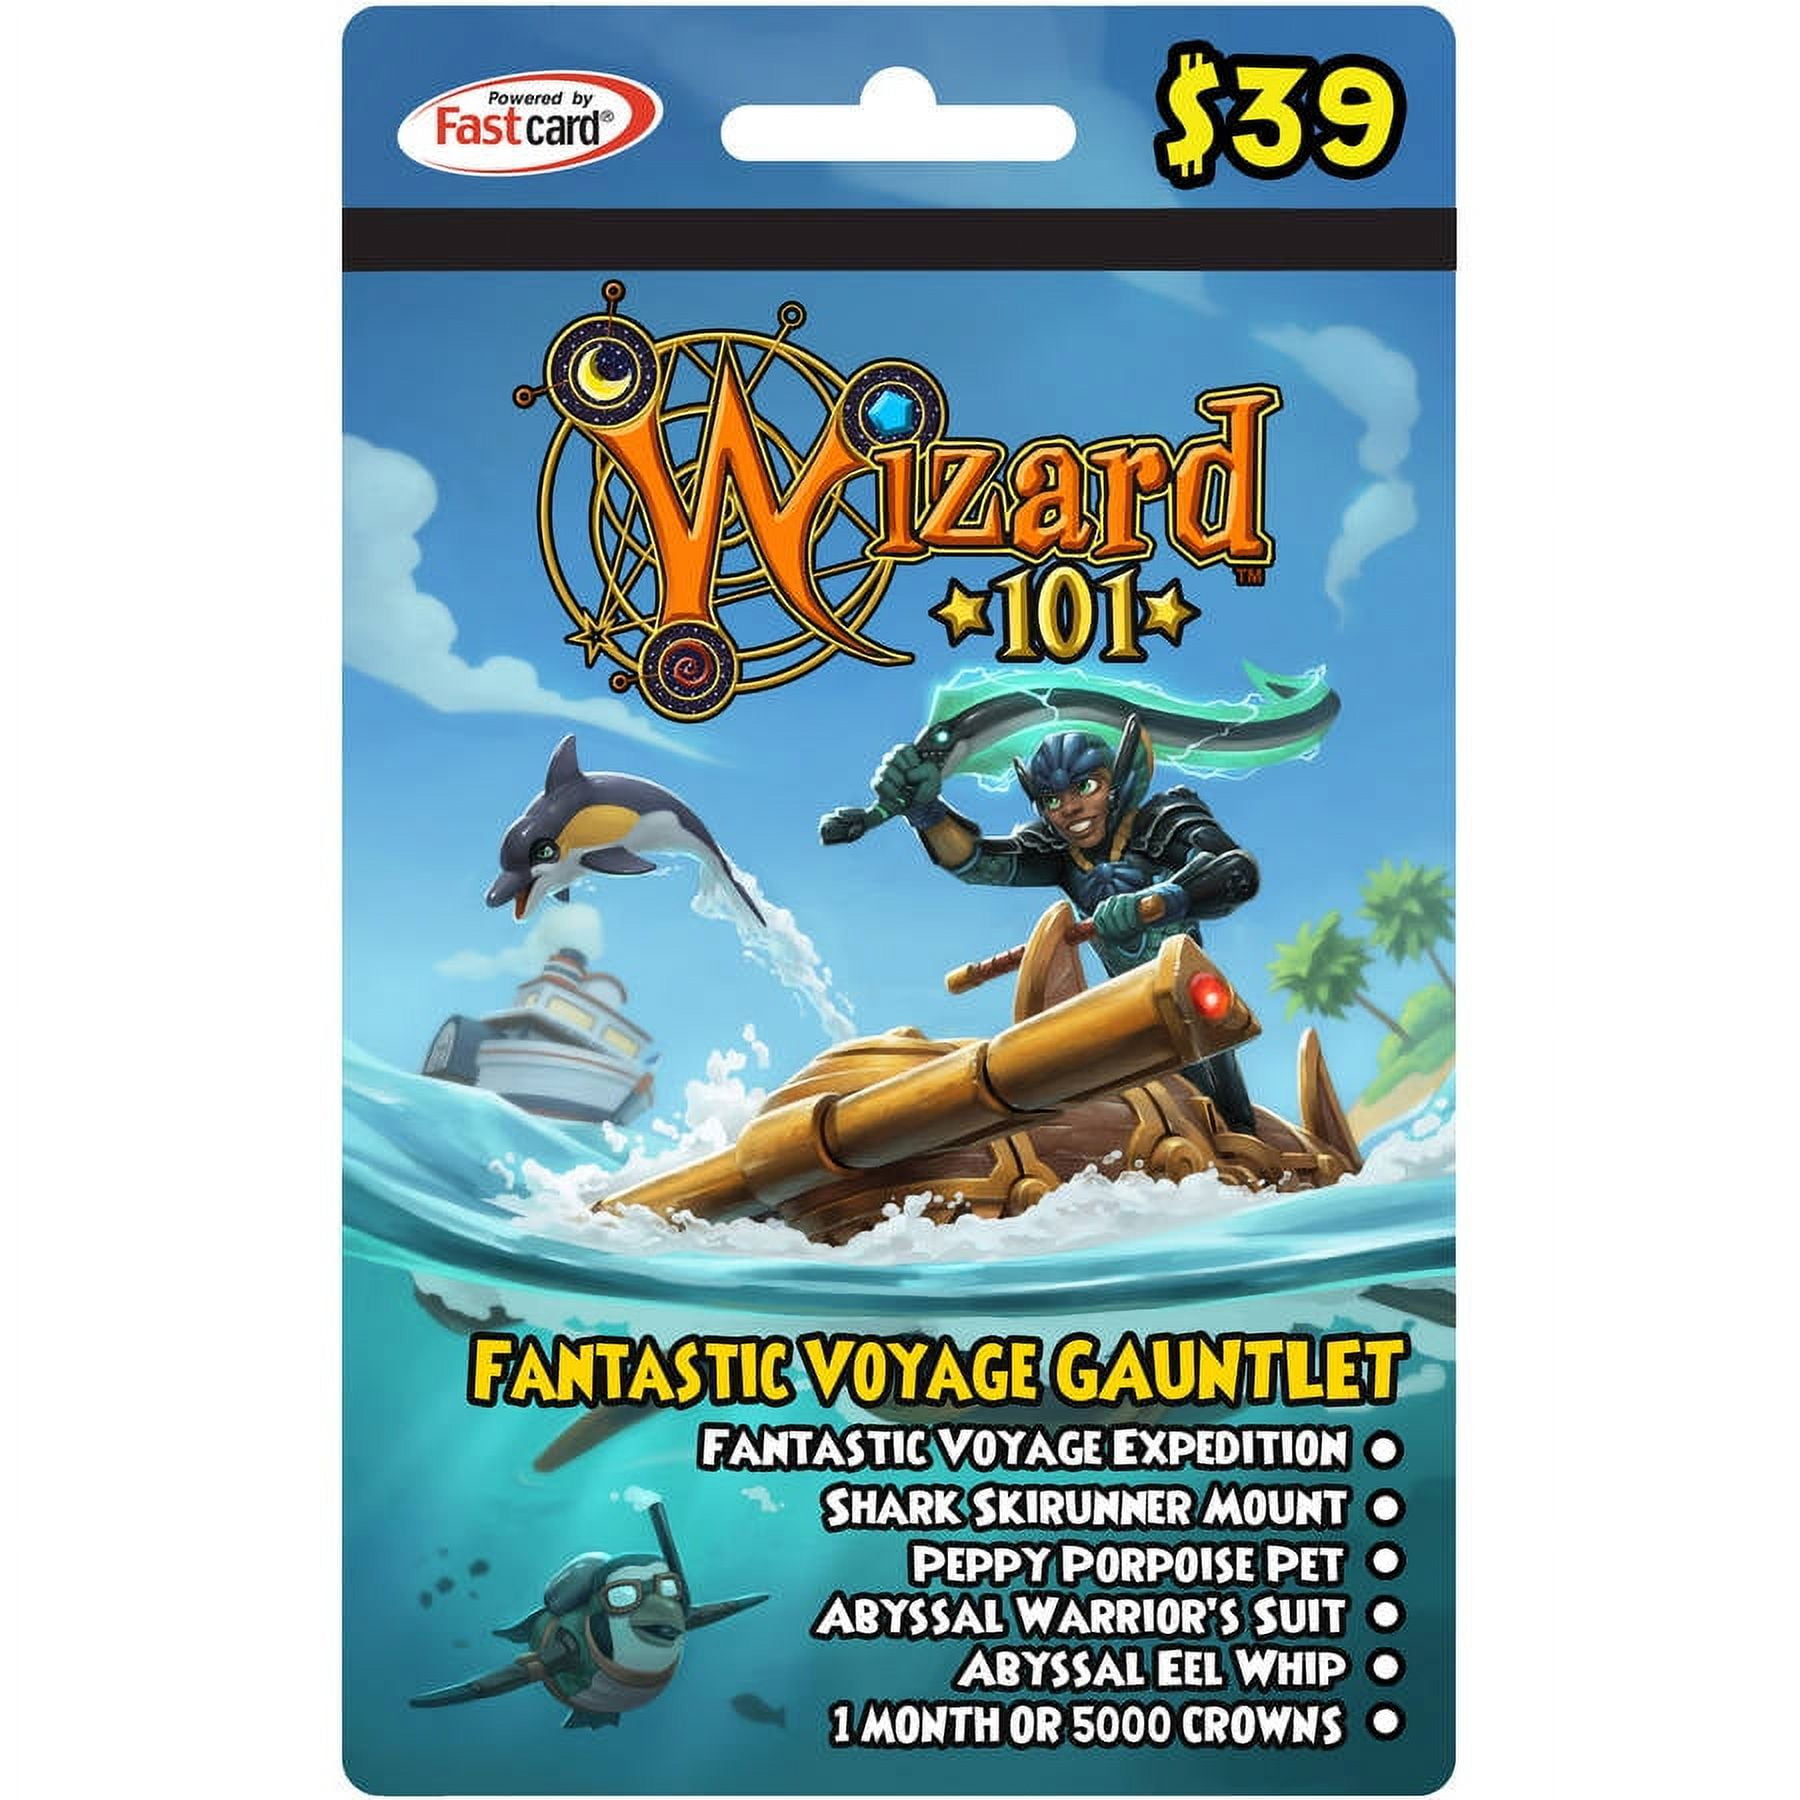 Shark Week  Wizard101 Free Online Game